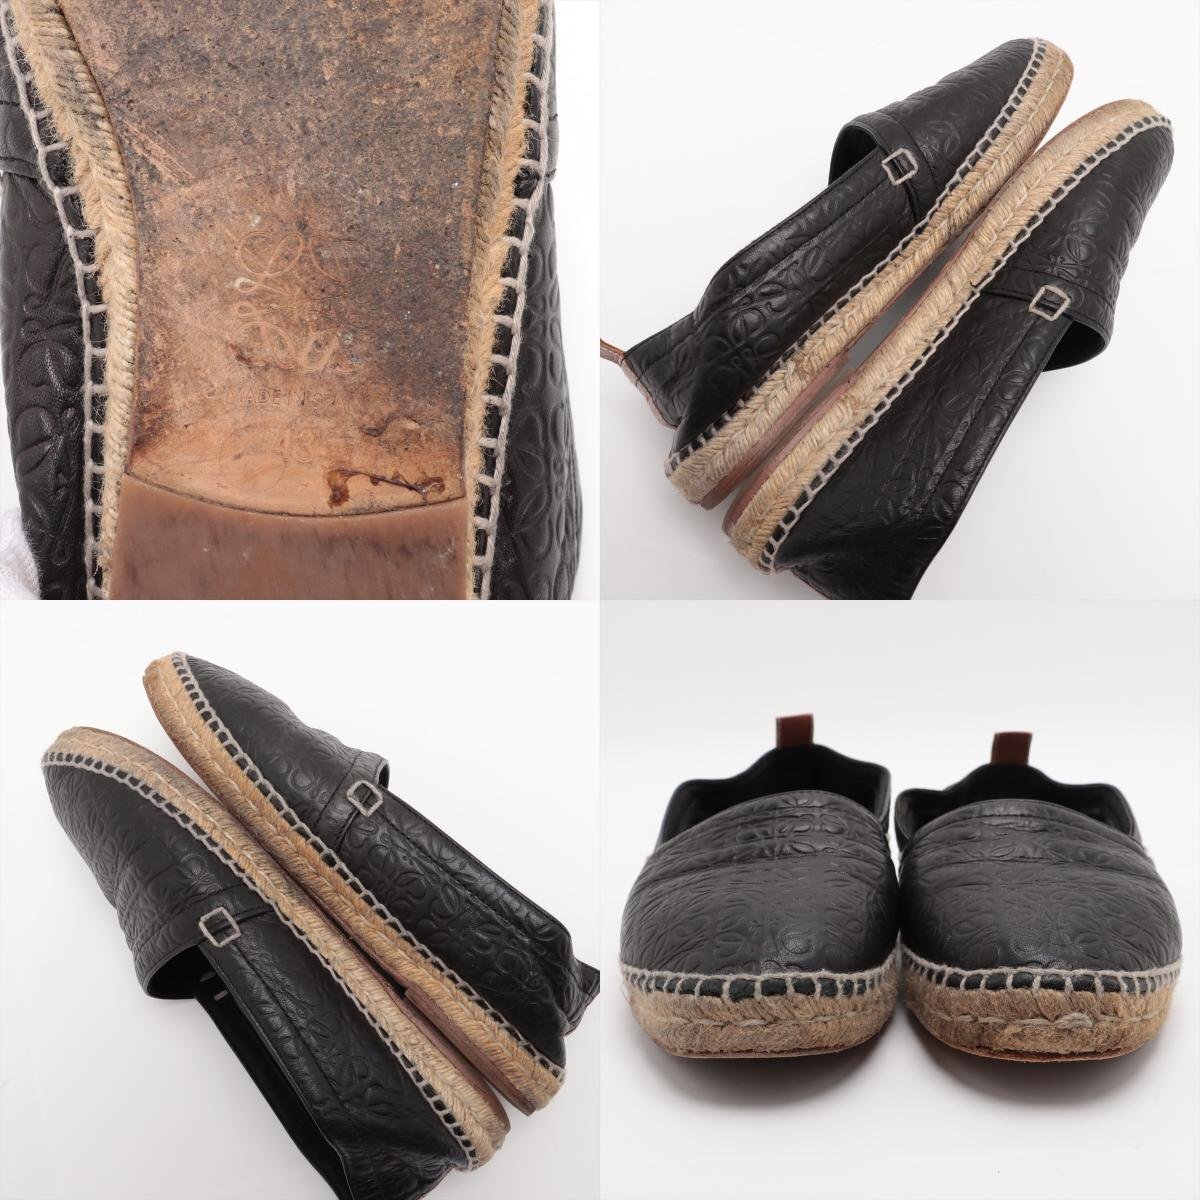 #1 jpy # Loewe # hole gram repeat espadrille 43 28.5cm corresponding leather slip-on shoes shoes flat shoes sandals men's EEM Y8-5